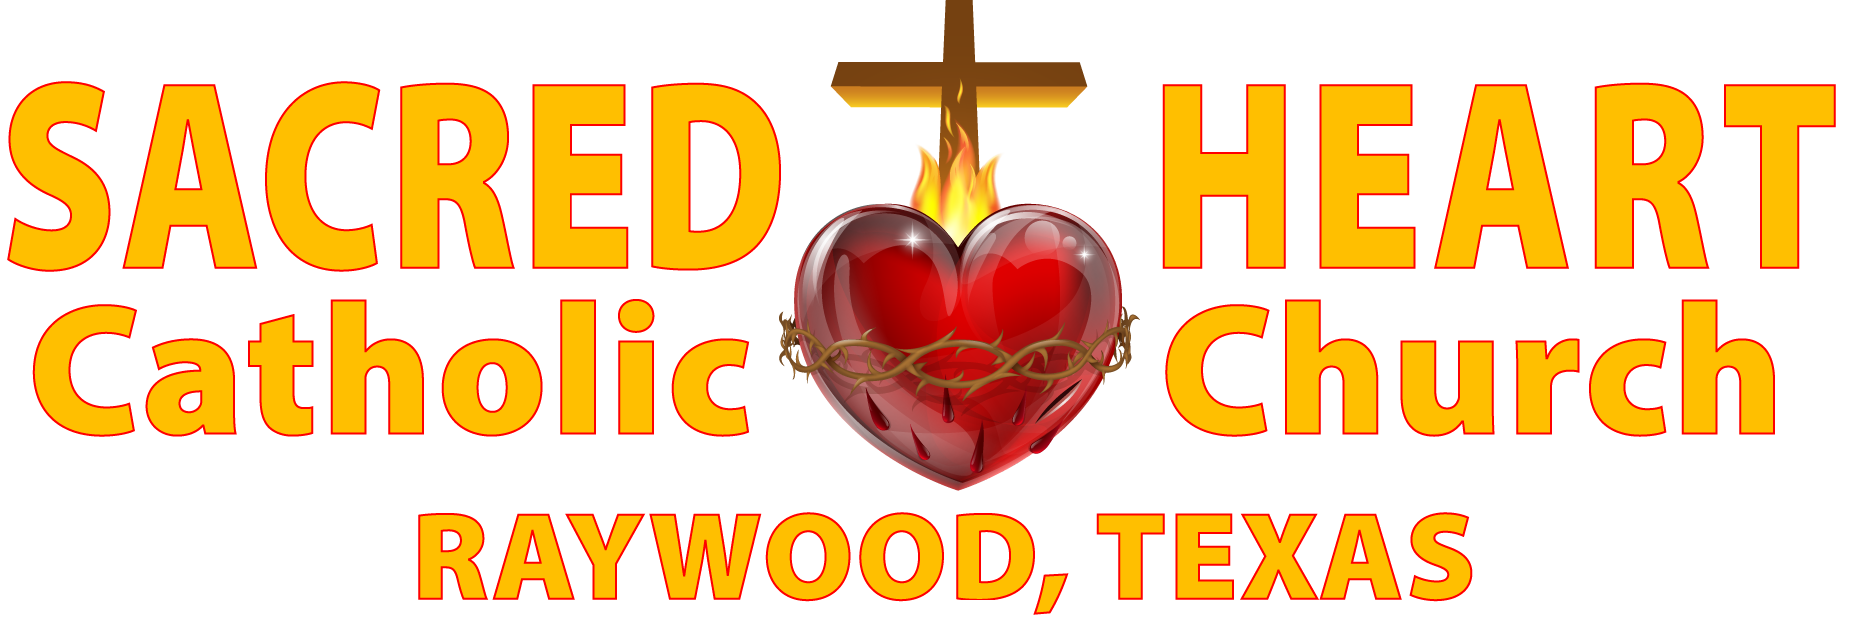 Sacred Heart Catholic Church Raywood Texas